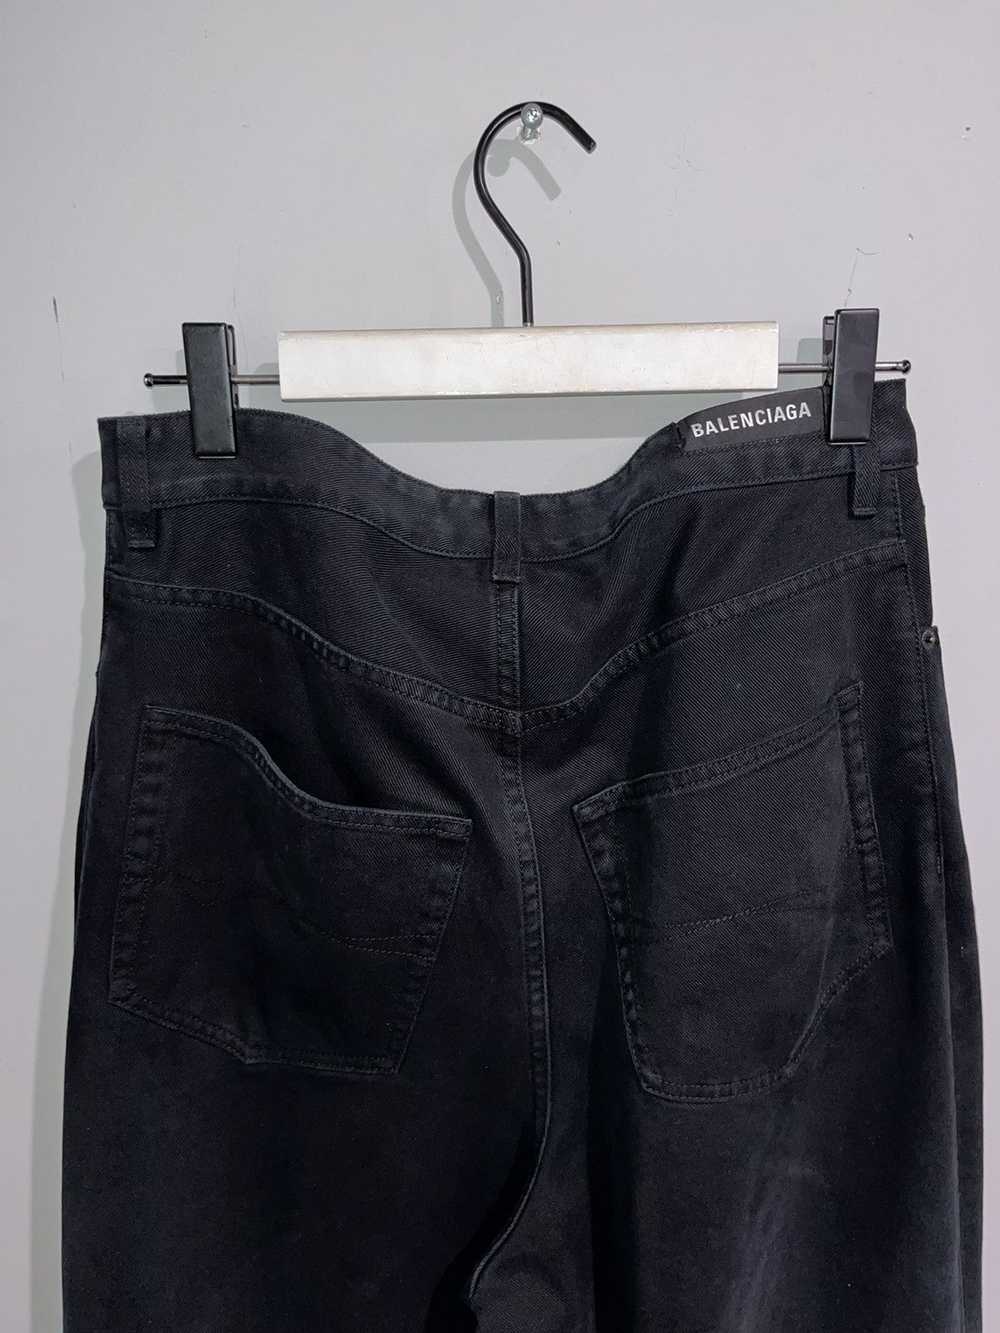 Balenciaga Baggy Pants in black soft left hand de… - image 7